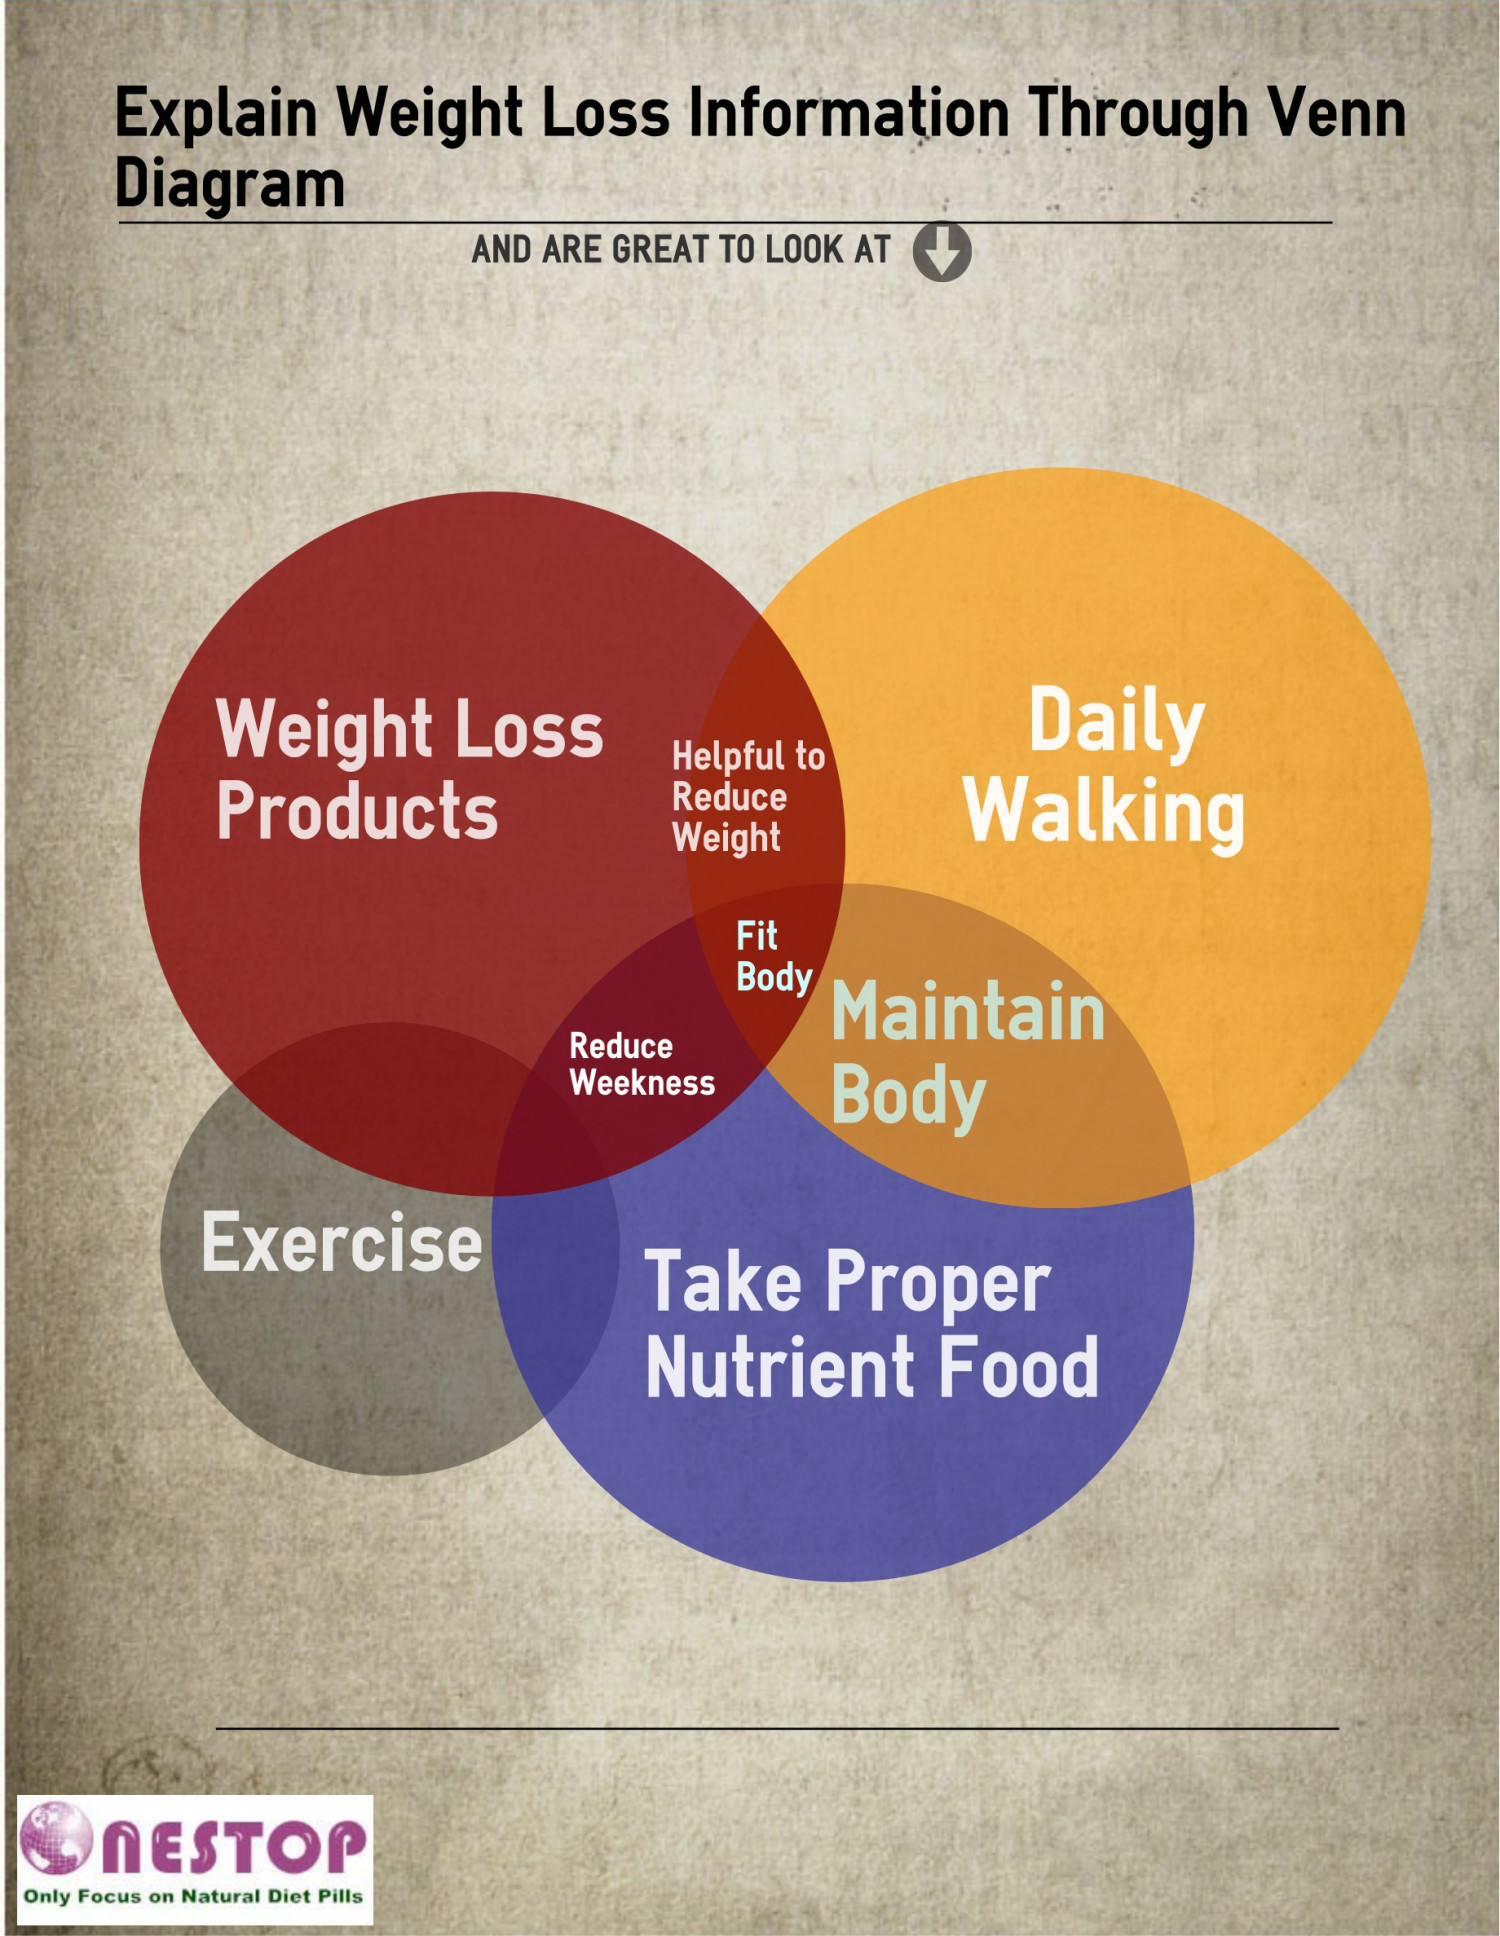 Explain Weight Loss InformationThroughVenn Diagram Infographic